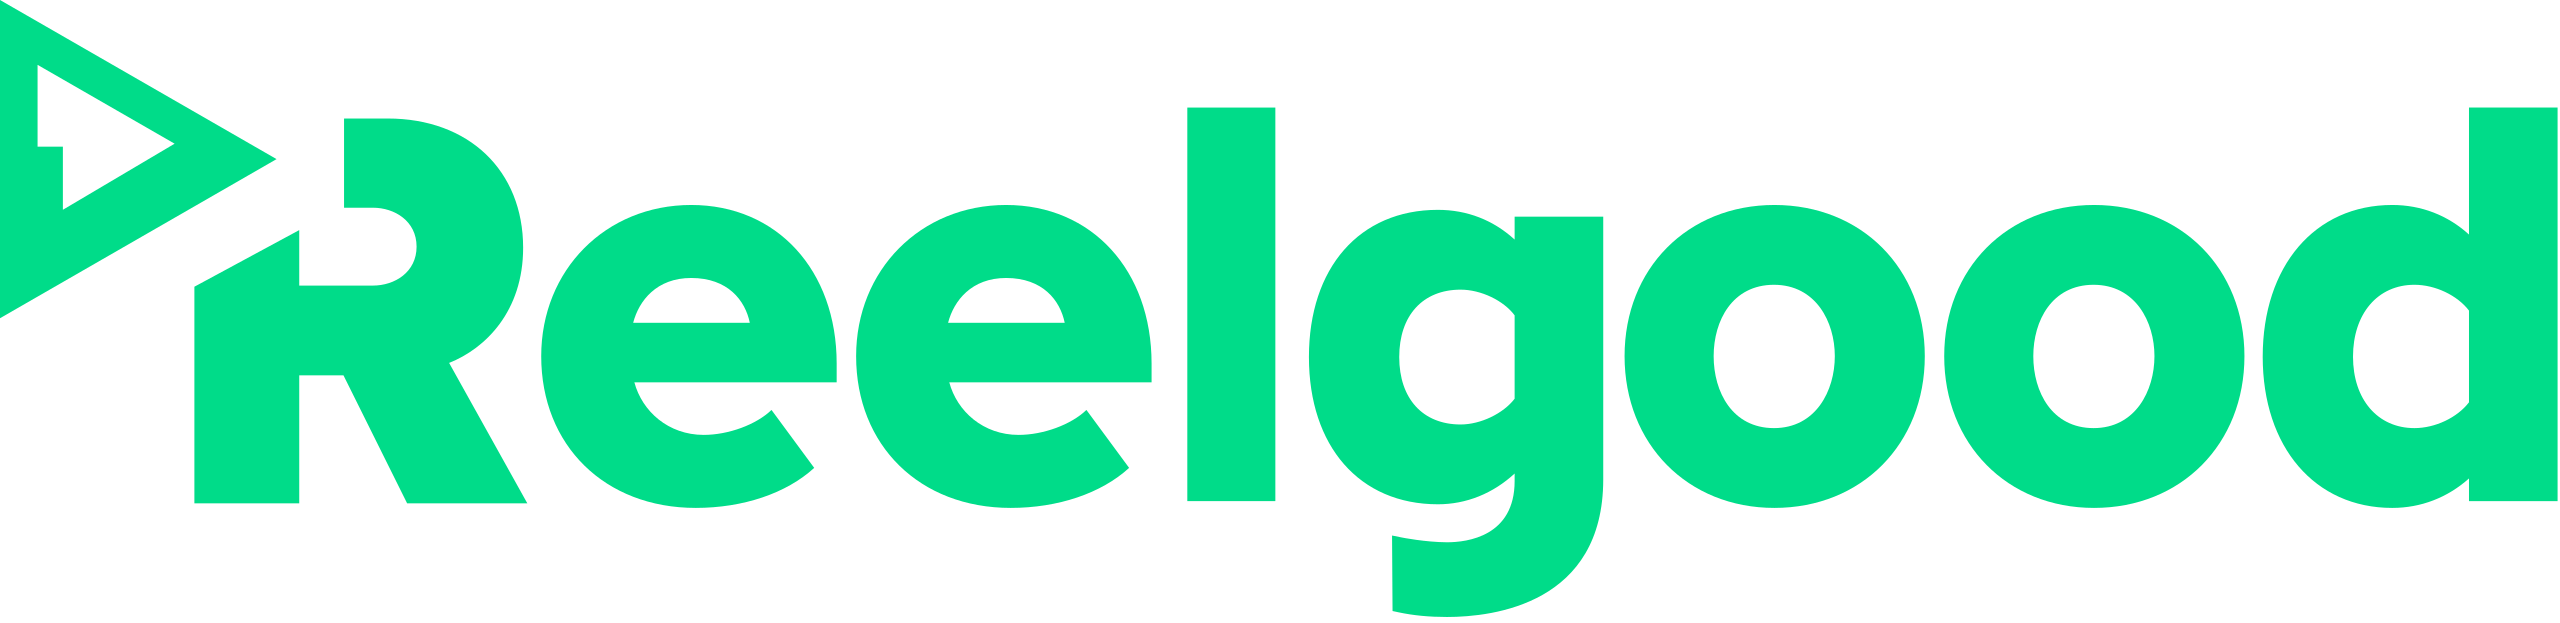 2560px-Reelgood_logo.svg